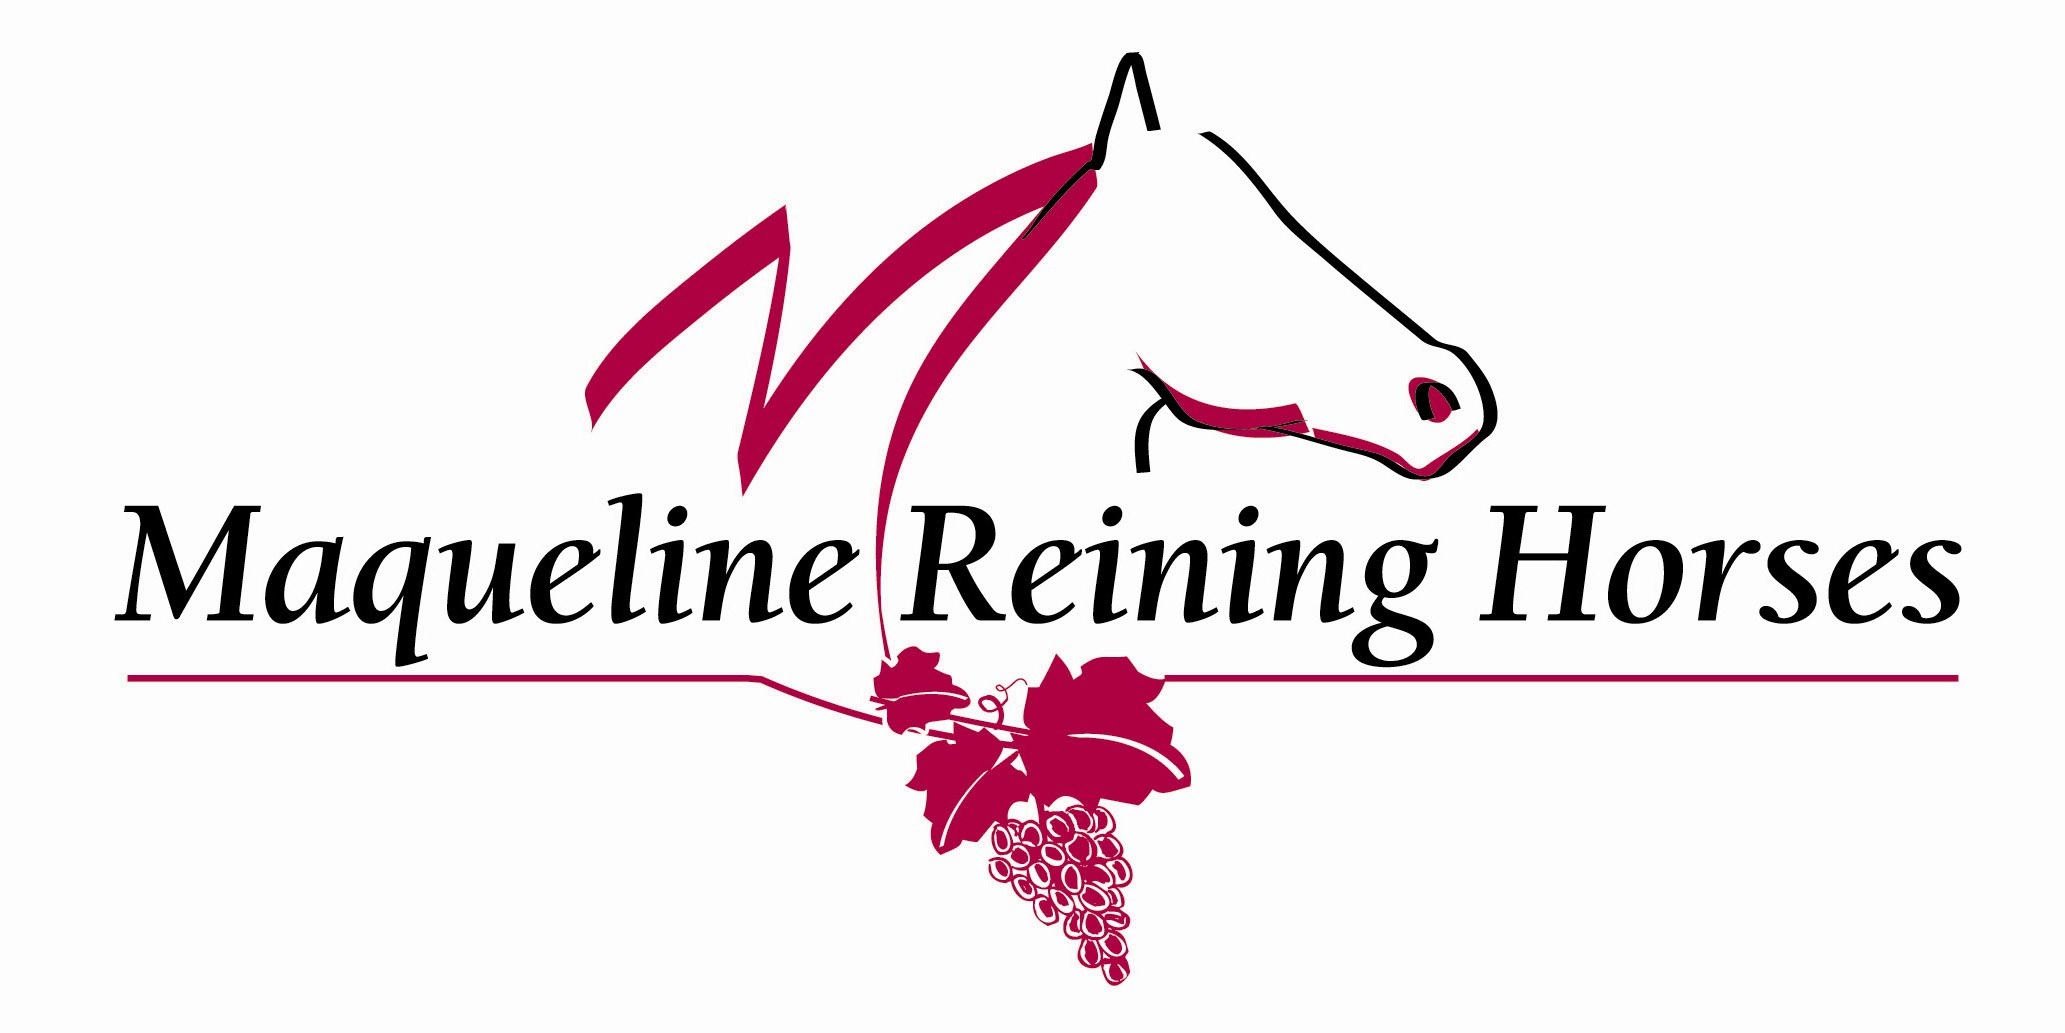 Maqueline Reining Horses